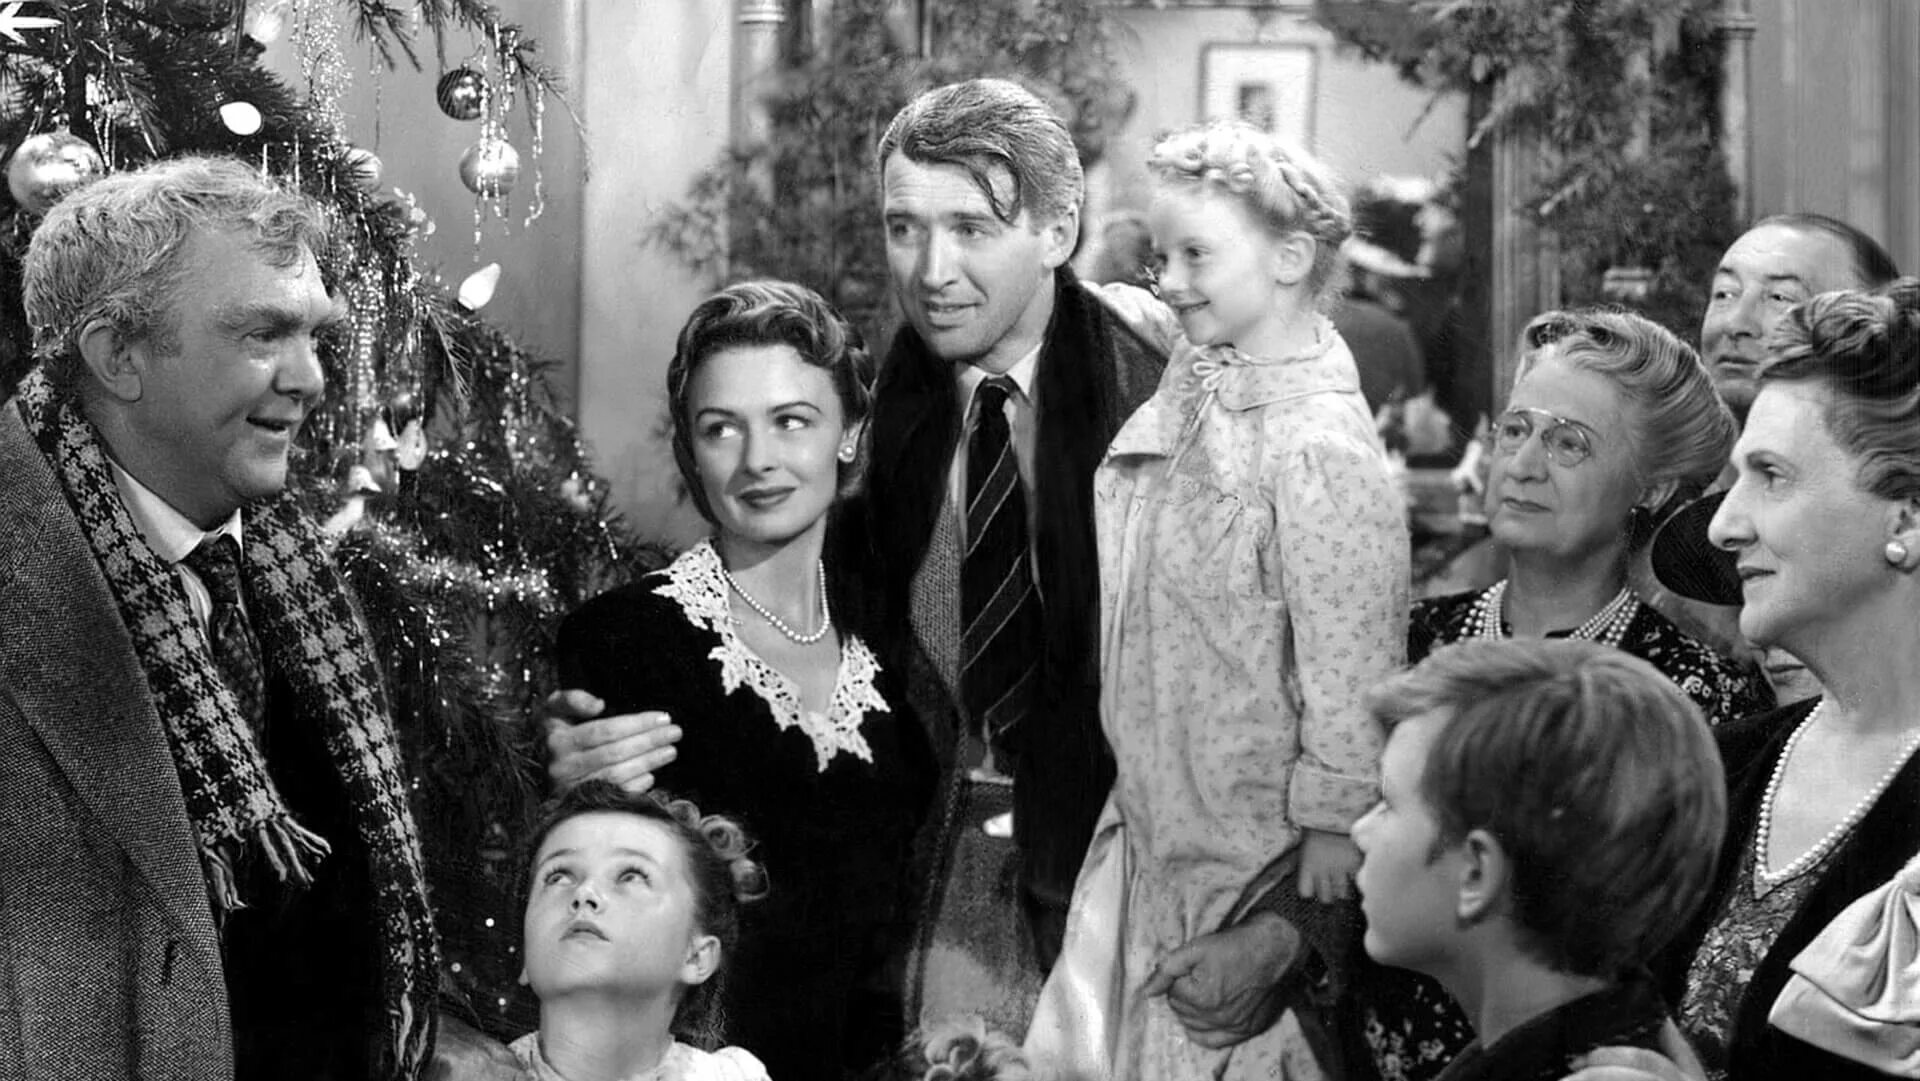 Замечательные судьбы. «Эта замечательная жизнь» («it's a wonderful Life»), реж. Фрэнк Капра, 1946. Фрэнк Капра эта прекрасная жизнь. It's a wonderful Life, 1946 кадры.